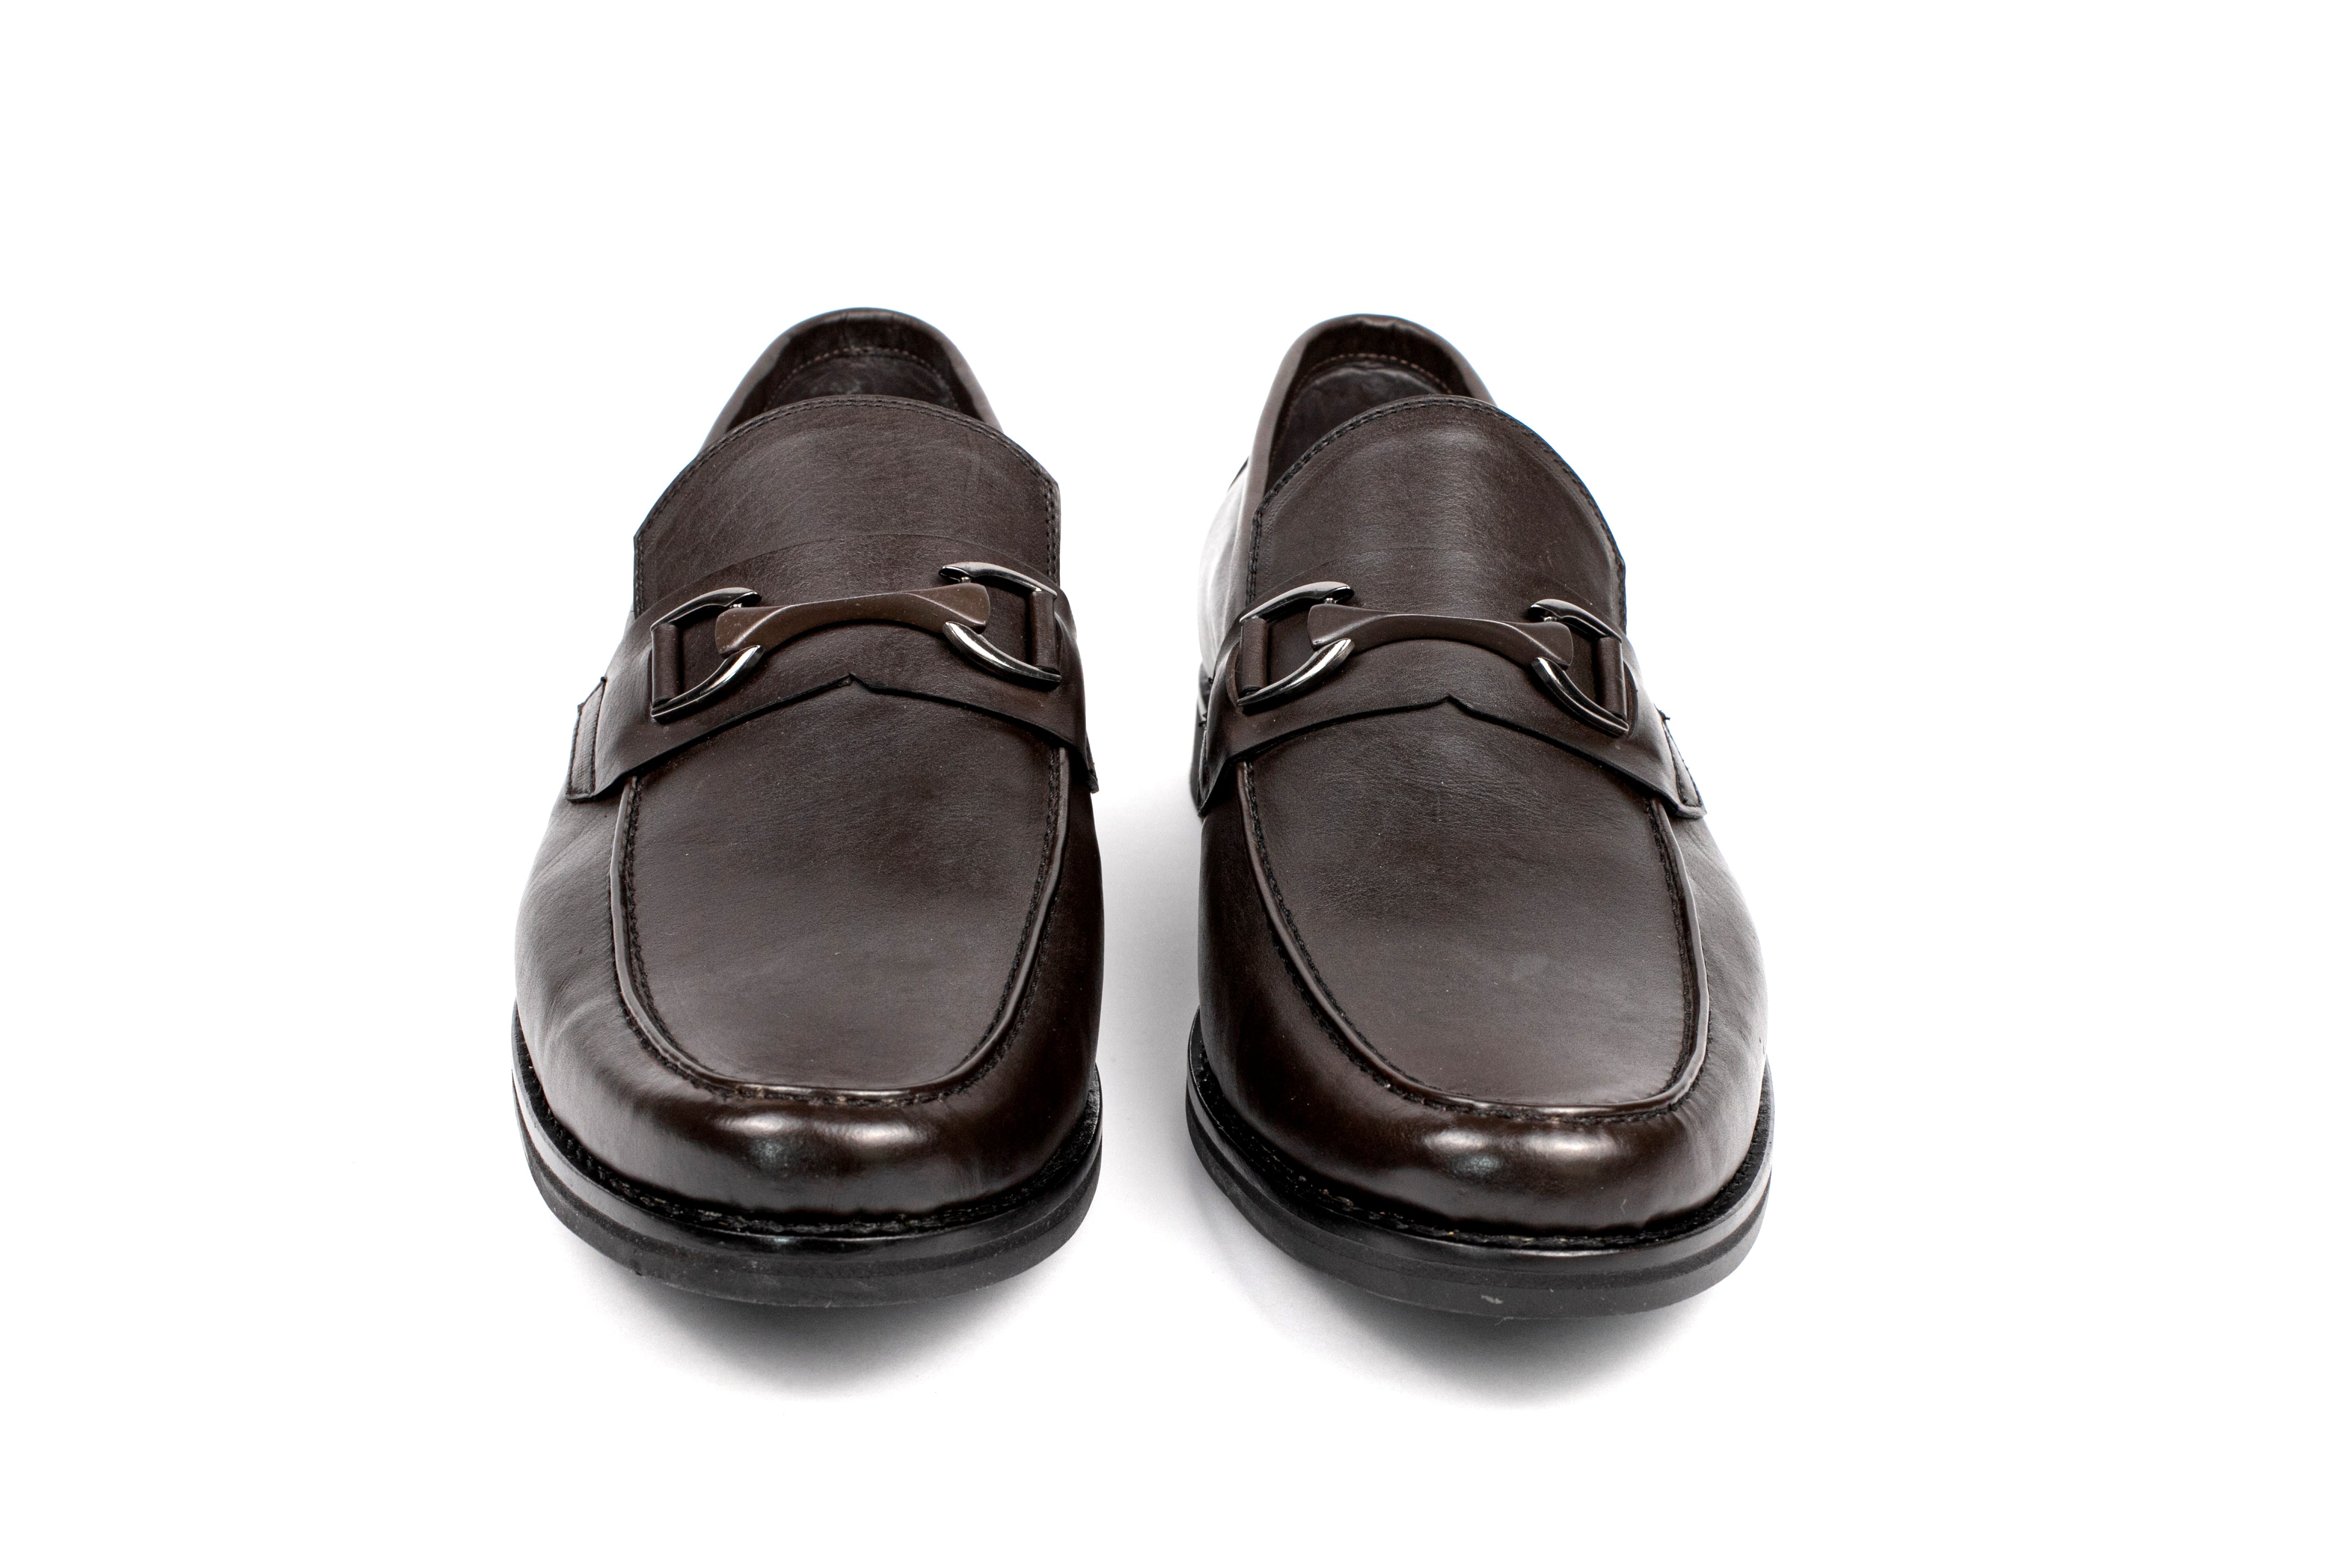 Loafer Horsebit - Luigi Rubber sole in Coffee Brown color